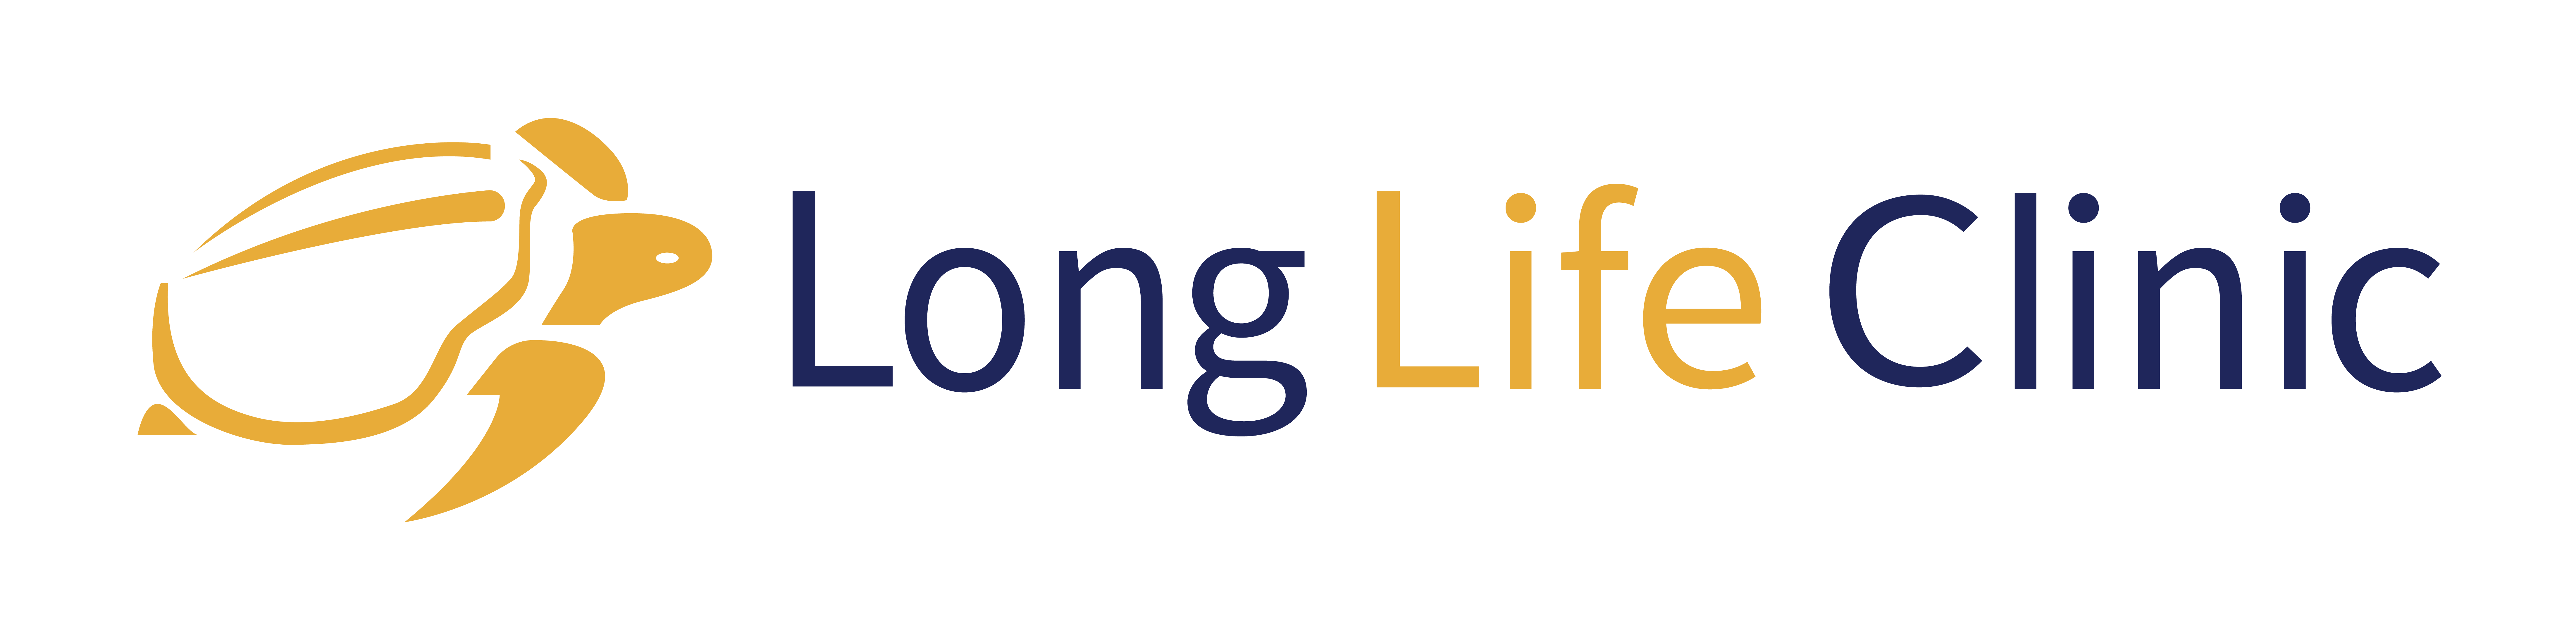 Long Life Clinic logo